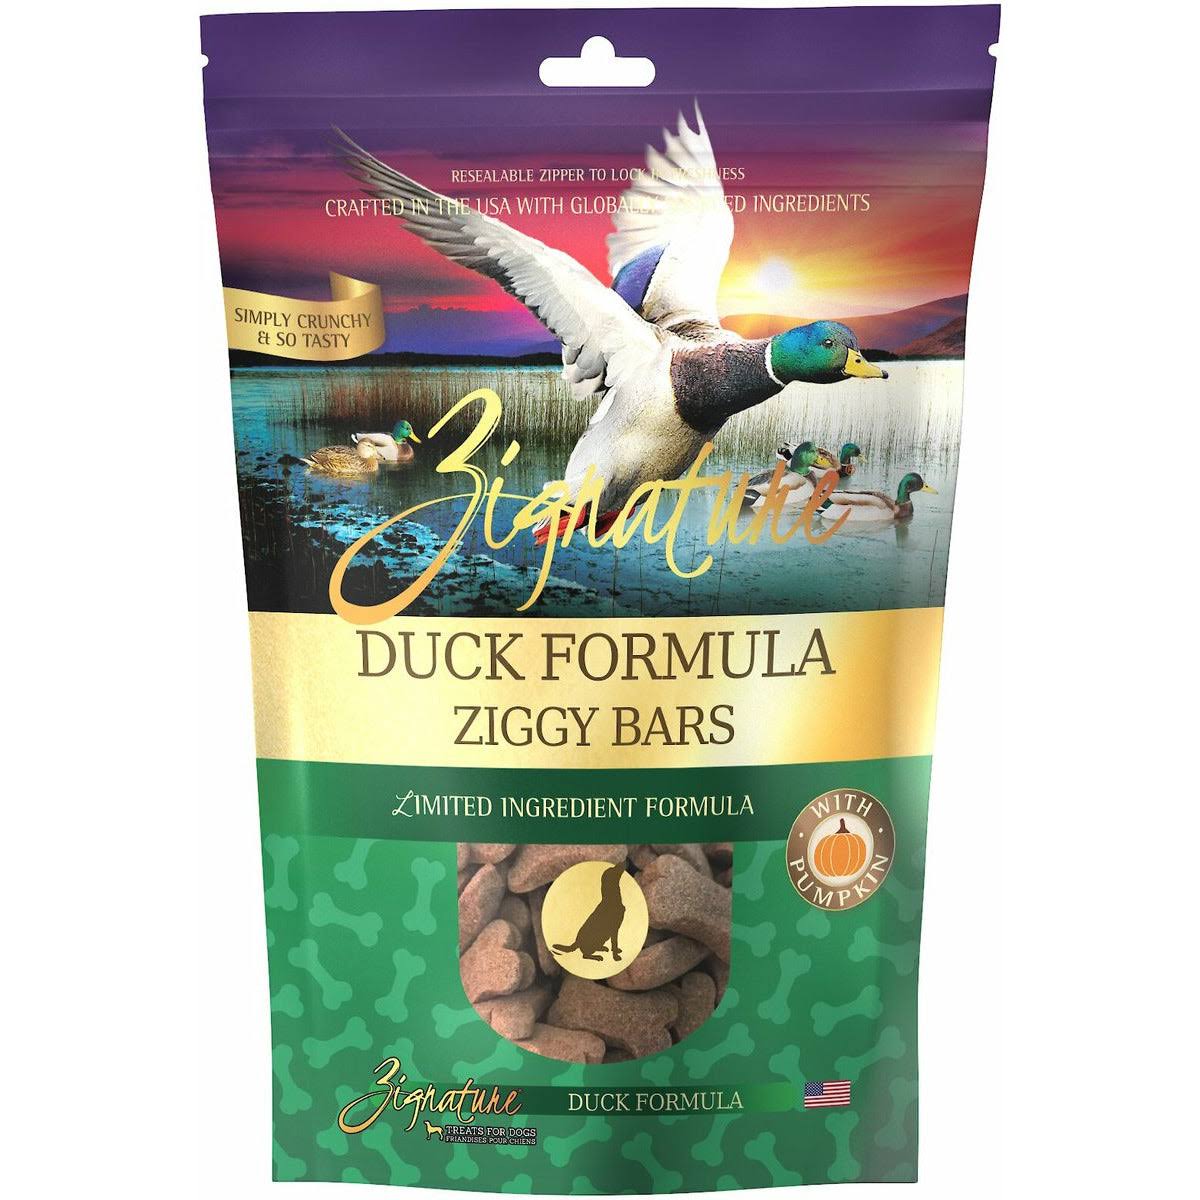 Zignature Limited Ingredient Duck Formula Ziggy Bars 12 oz